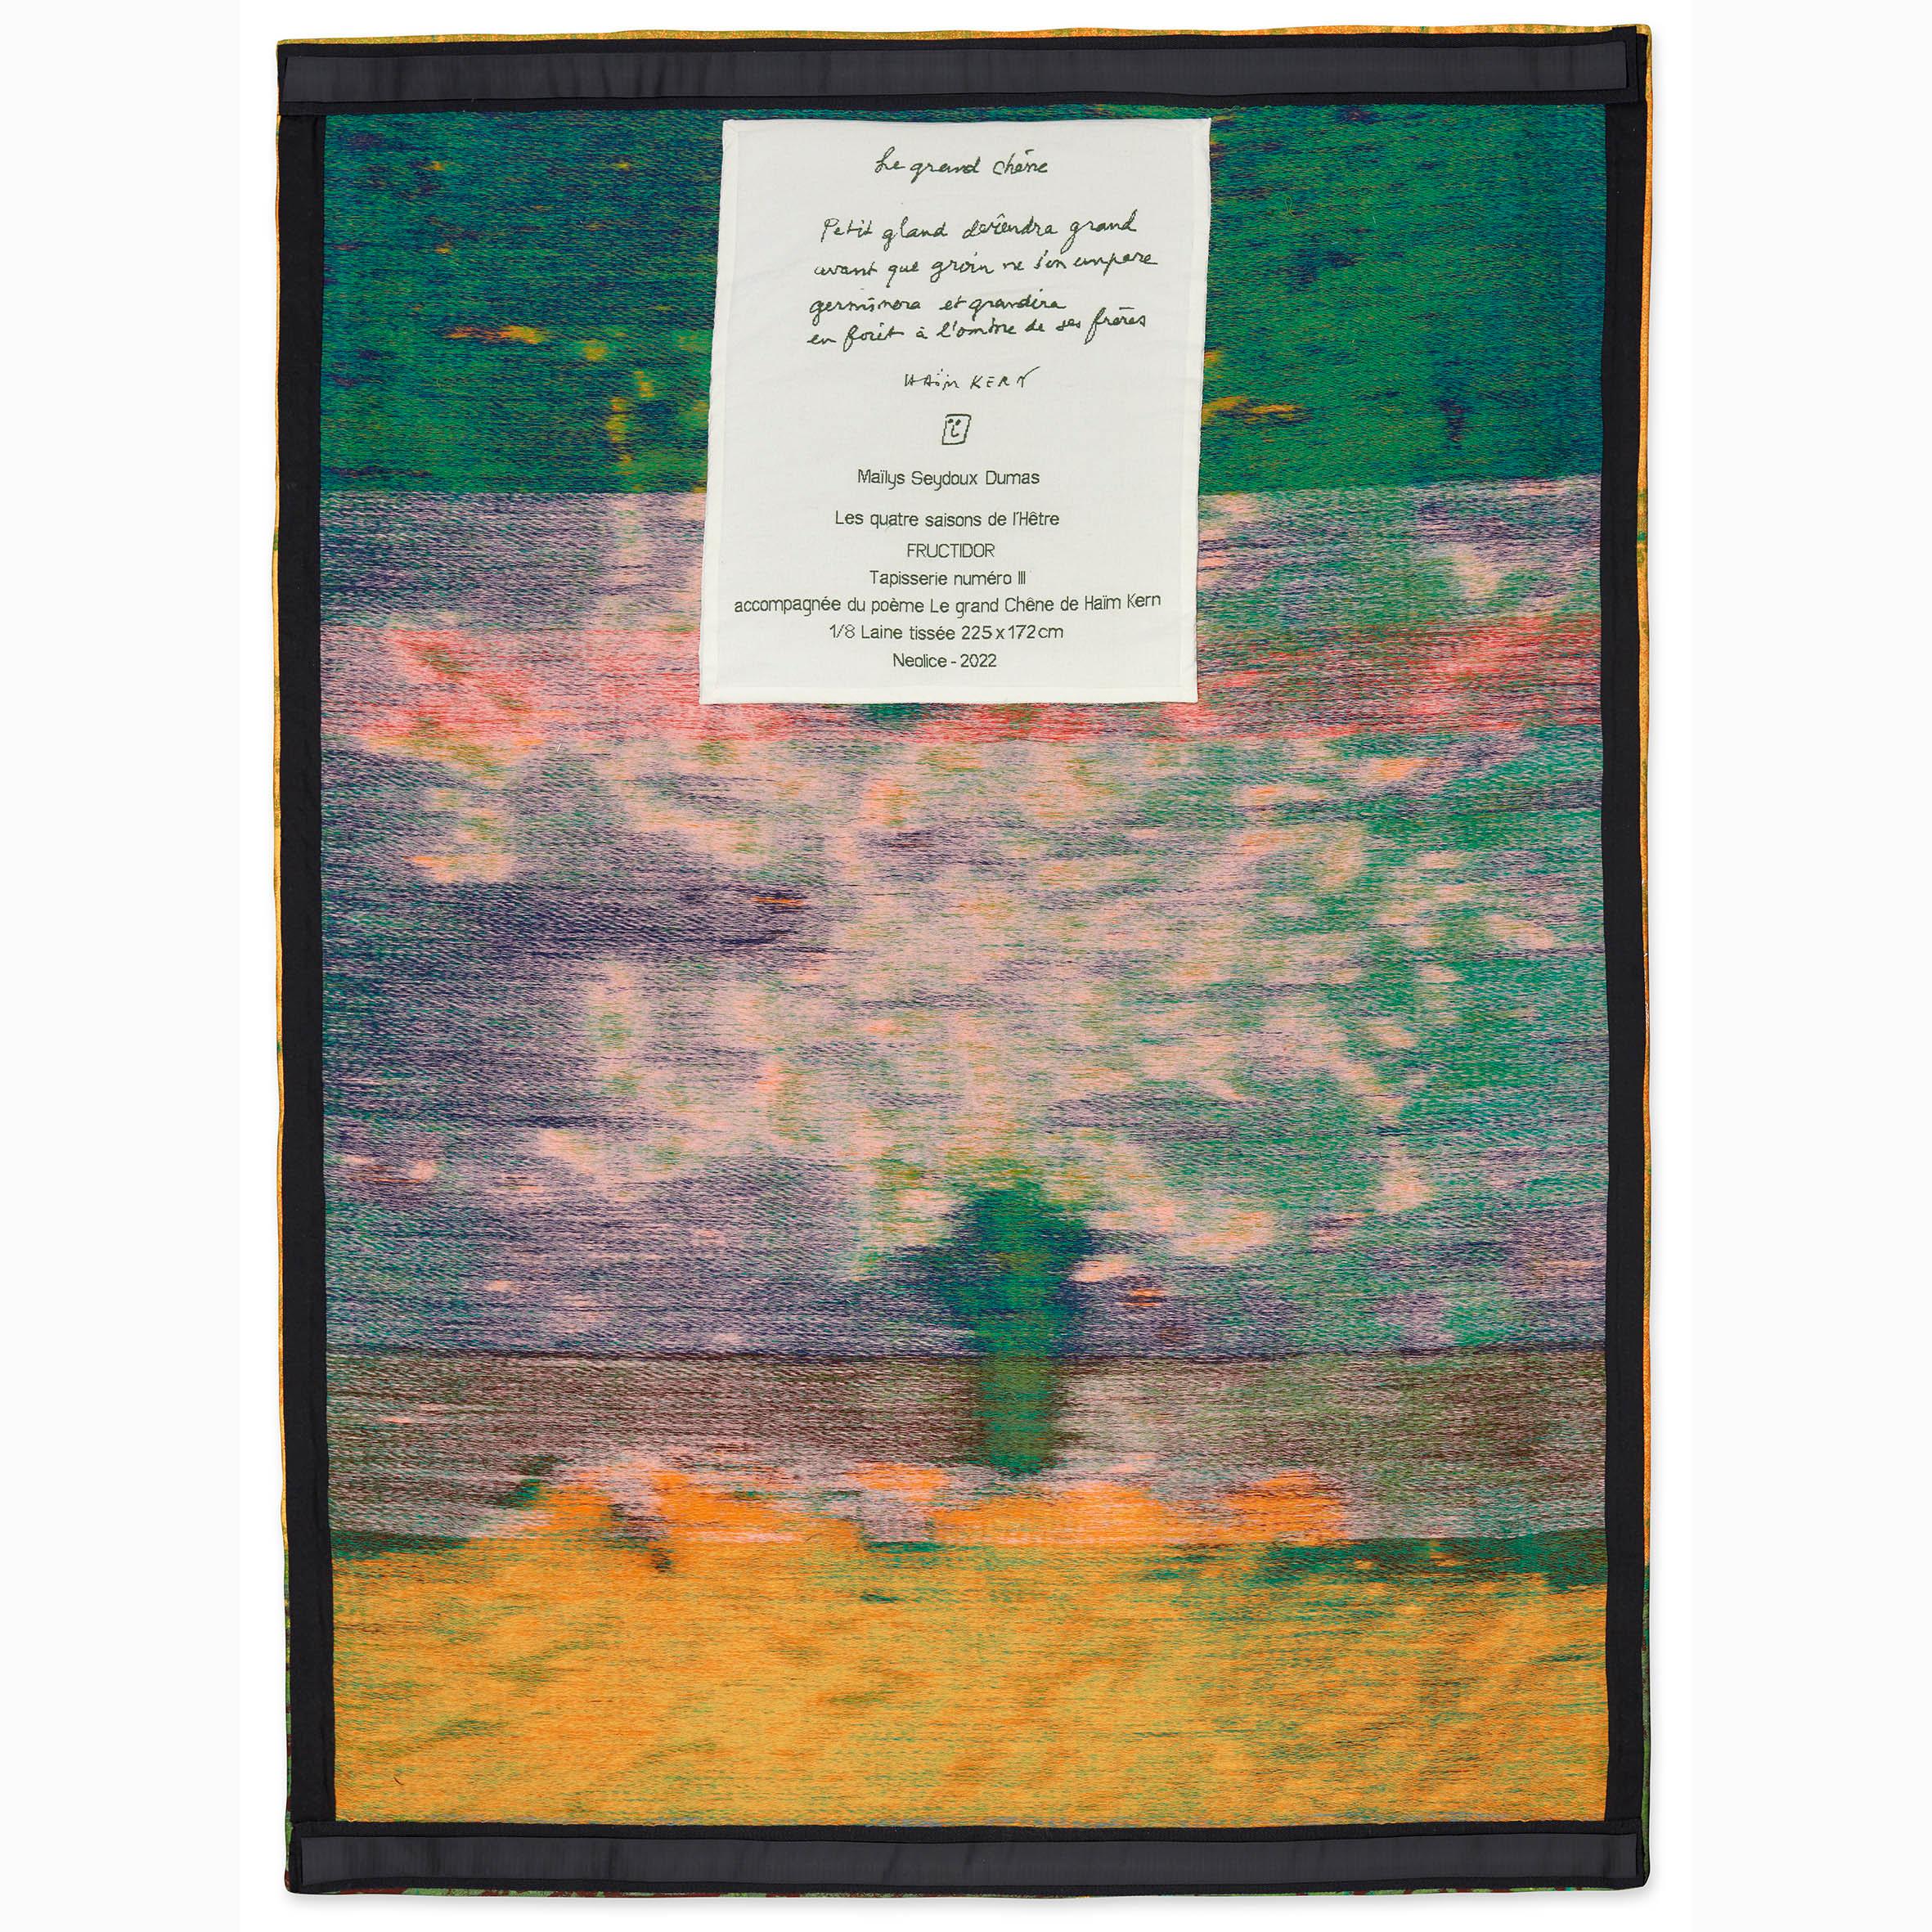 Woven Maïlys Seydoux-Dumas, Fructidor, Wool Tapestry, Néolice, 2022 For Sale